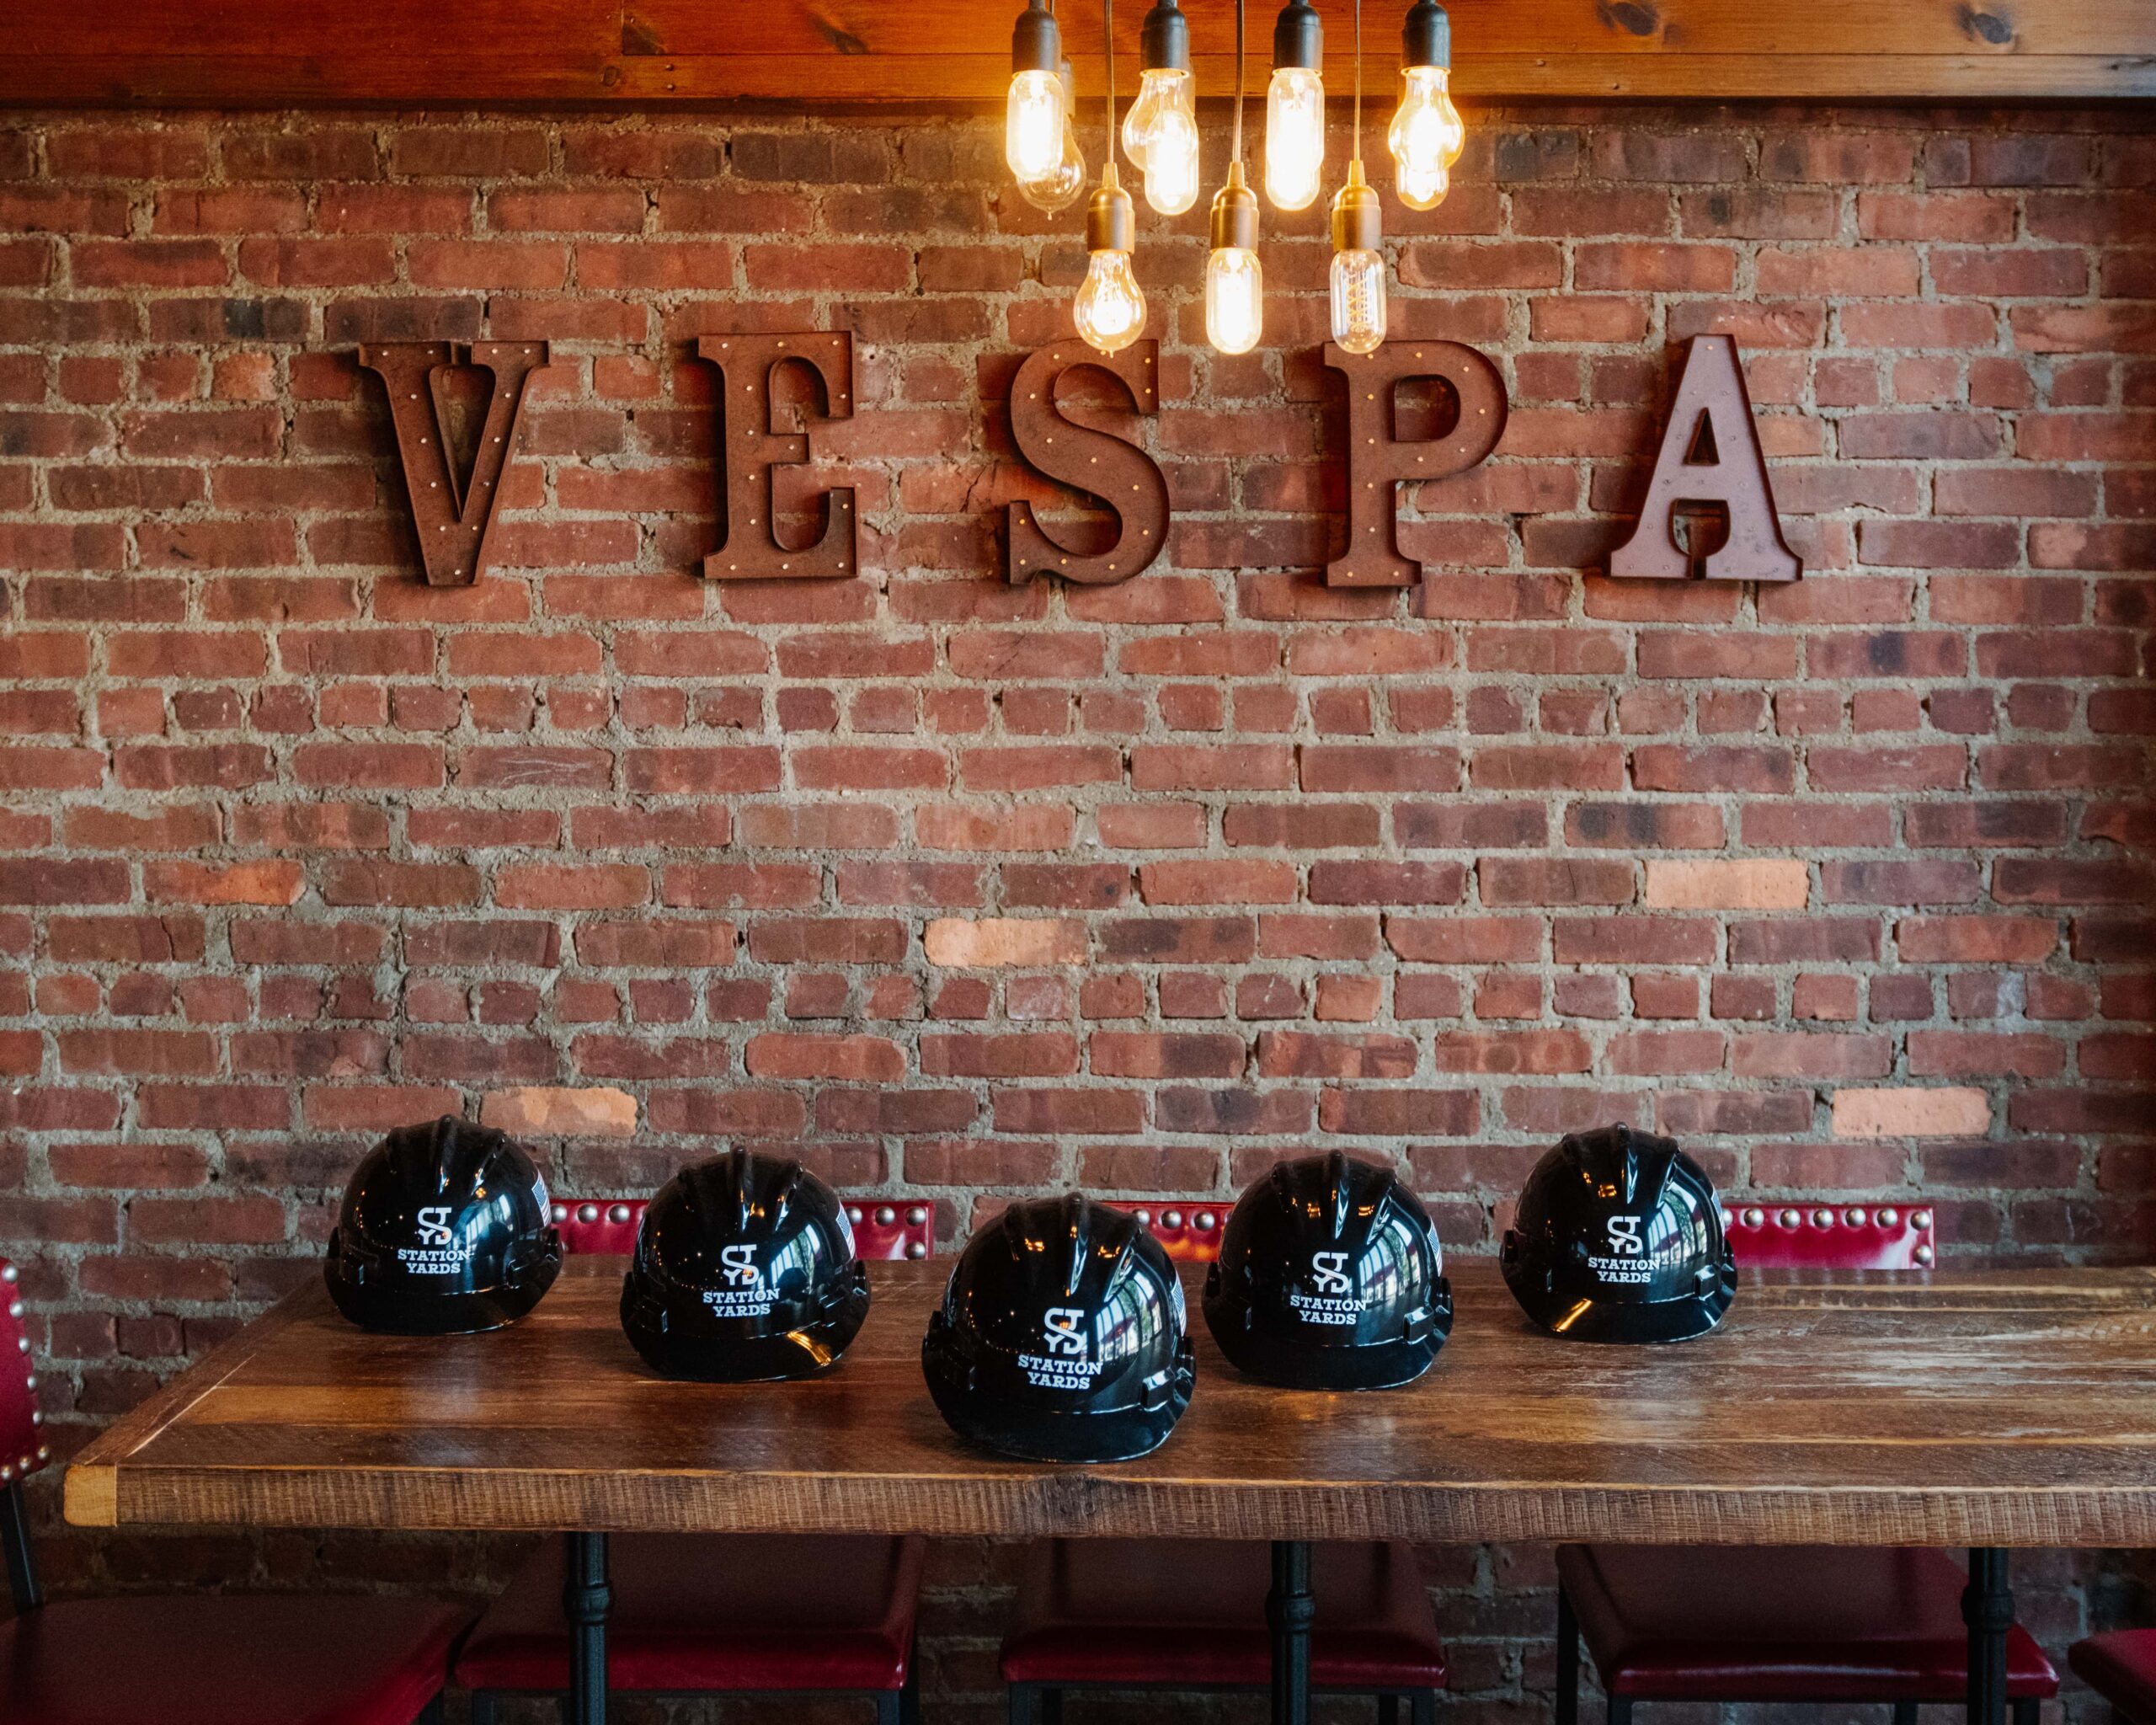 Station Yards hardhats at VESPA Italian Kitchen & Bar